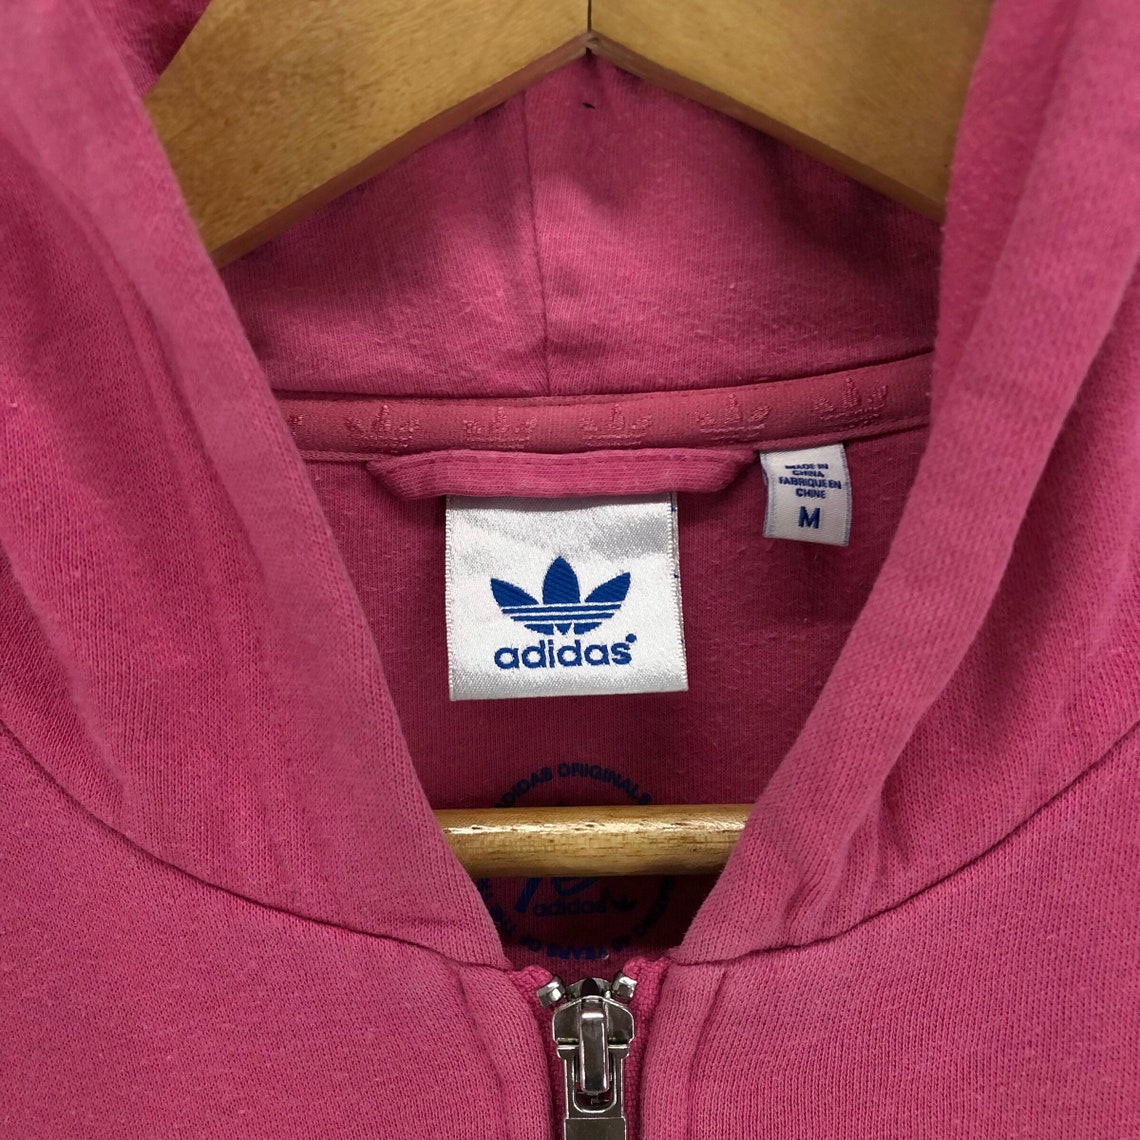 Adidas Original Zip up Sweater Hoodie Sweatshirt Big Logo - Etsy UK